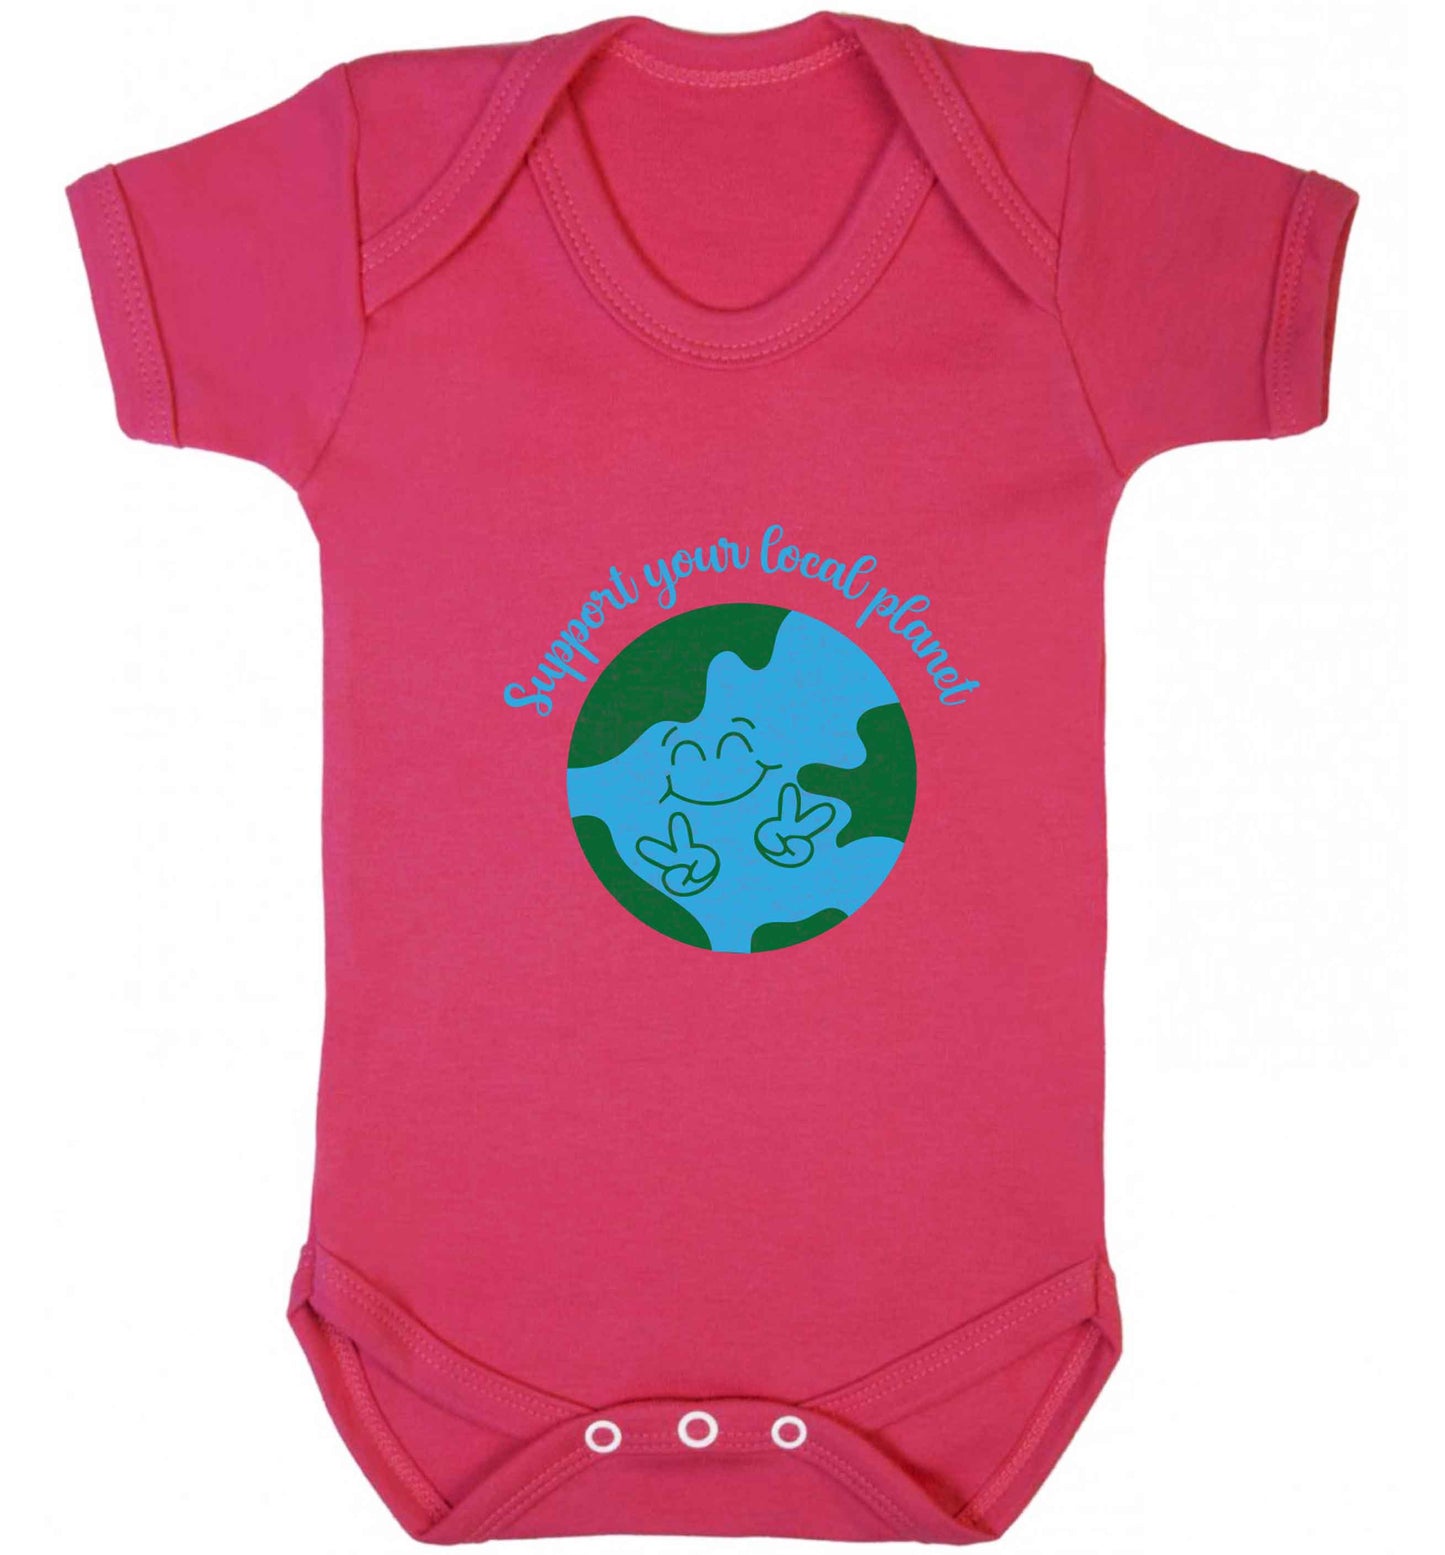 Support your local planet baby vest dark pink 18-24 months